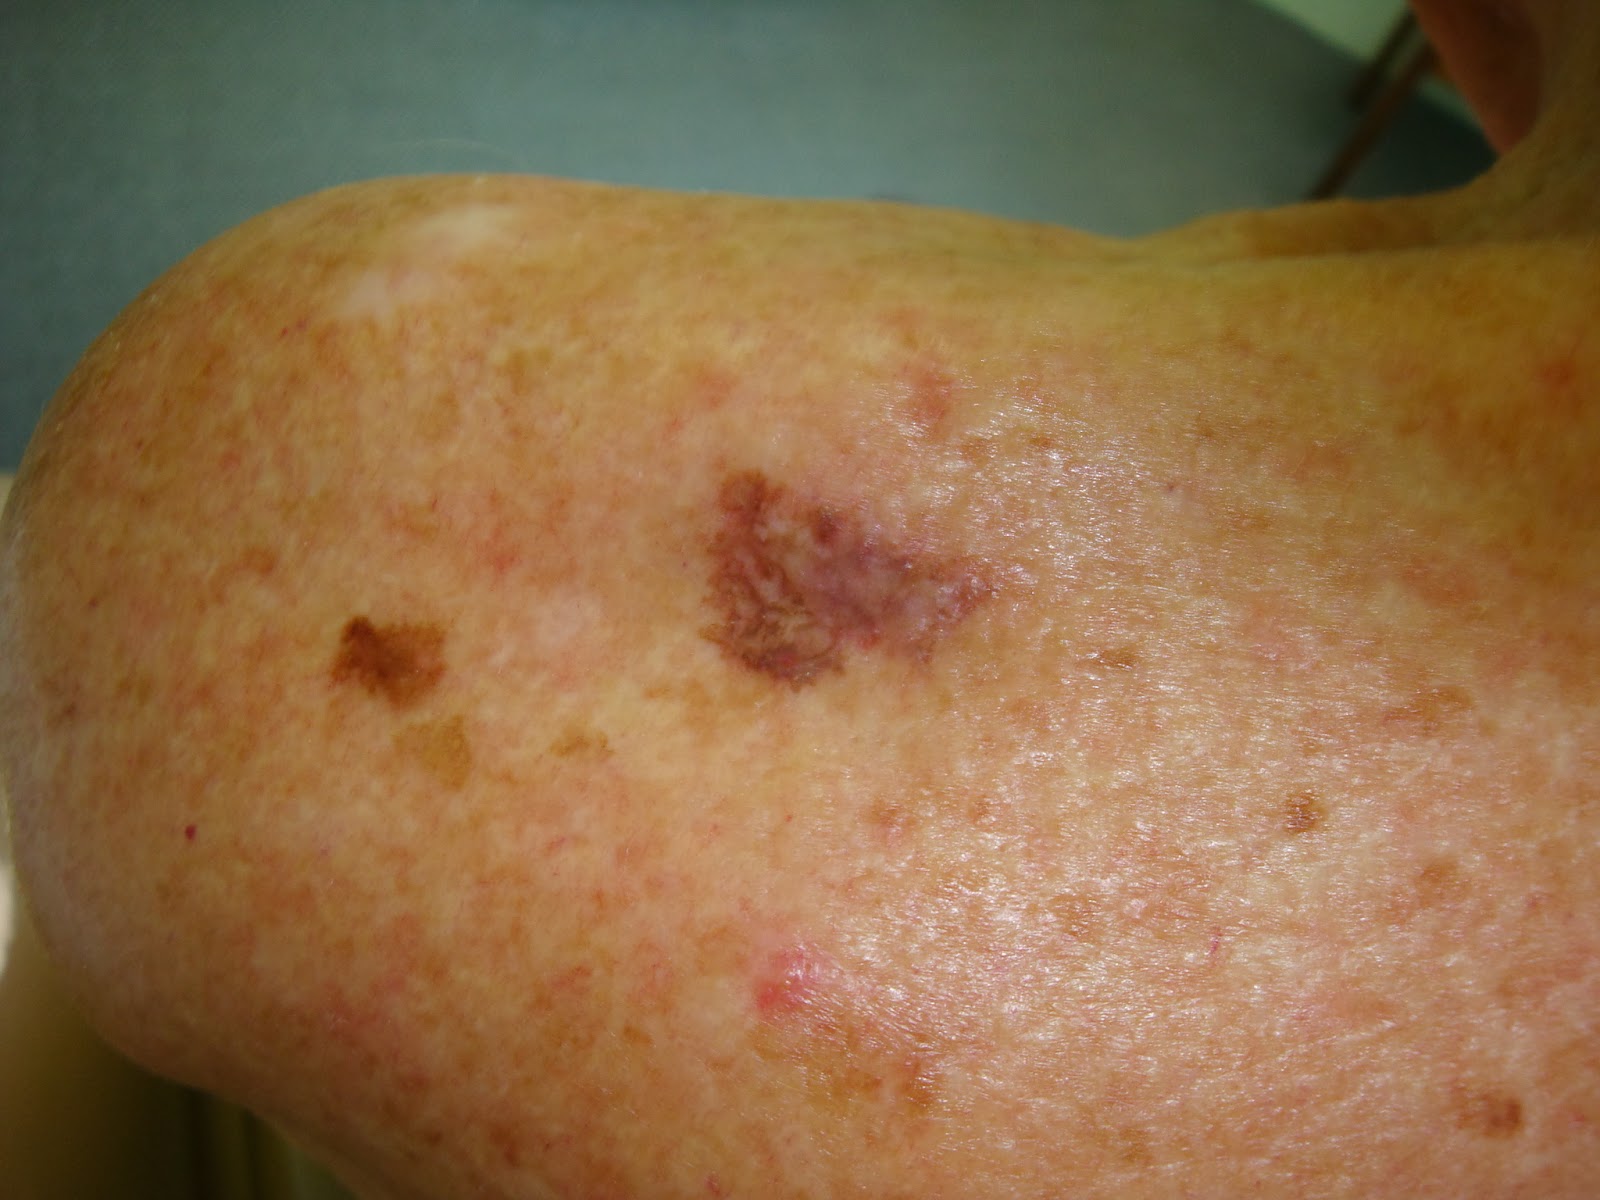 Acral lentiginous melanoma | DermNet New Zealand